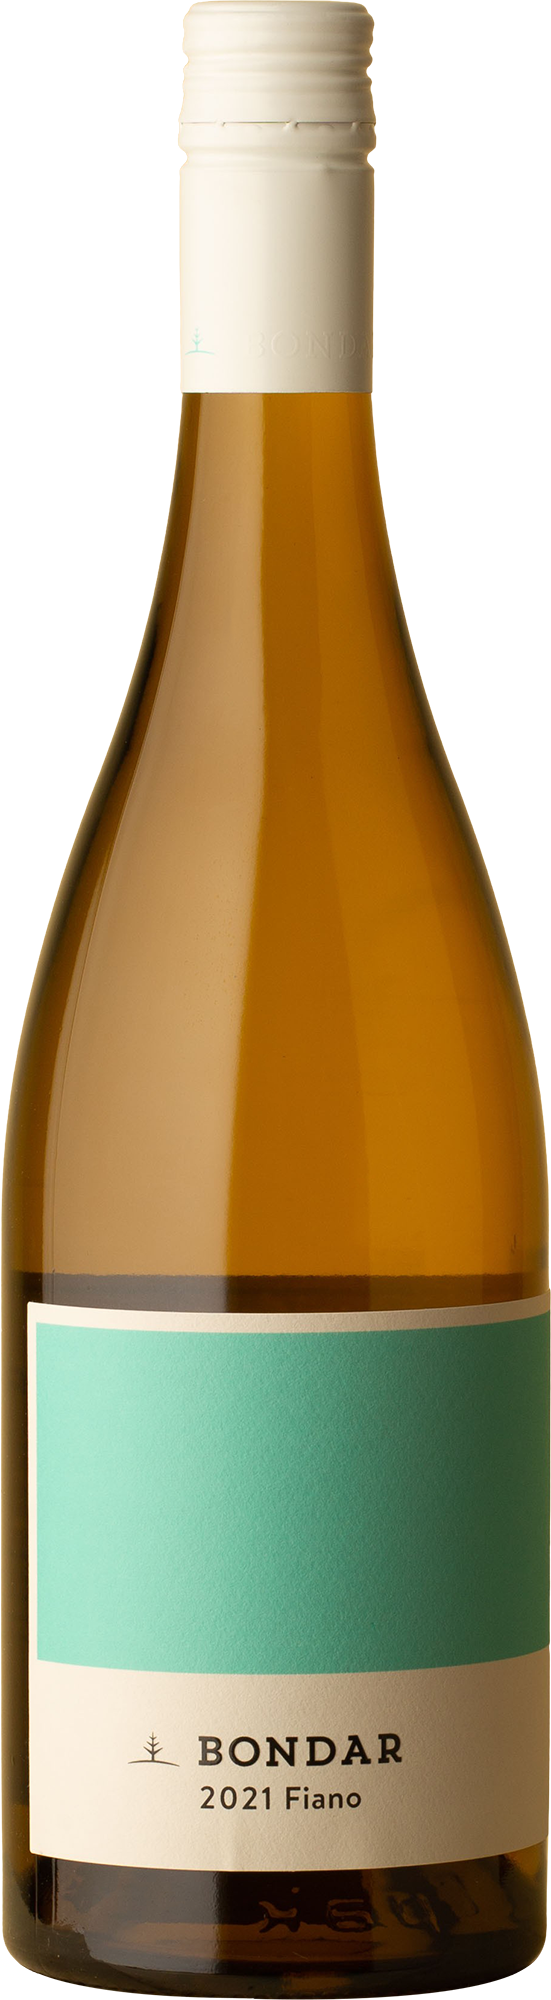 Bondar - Fiano 2021 White Wine